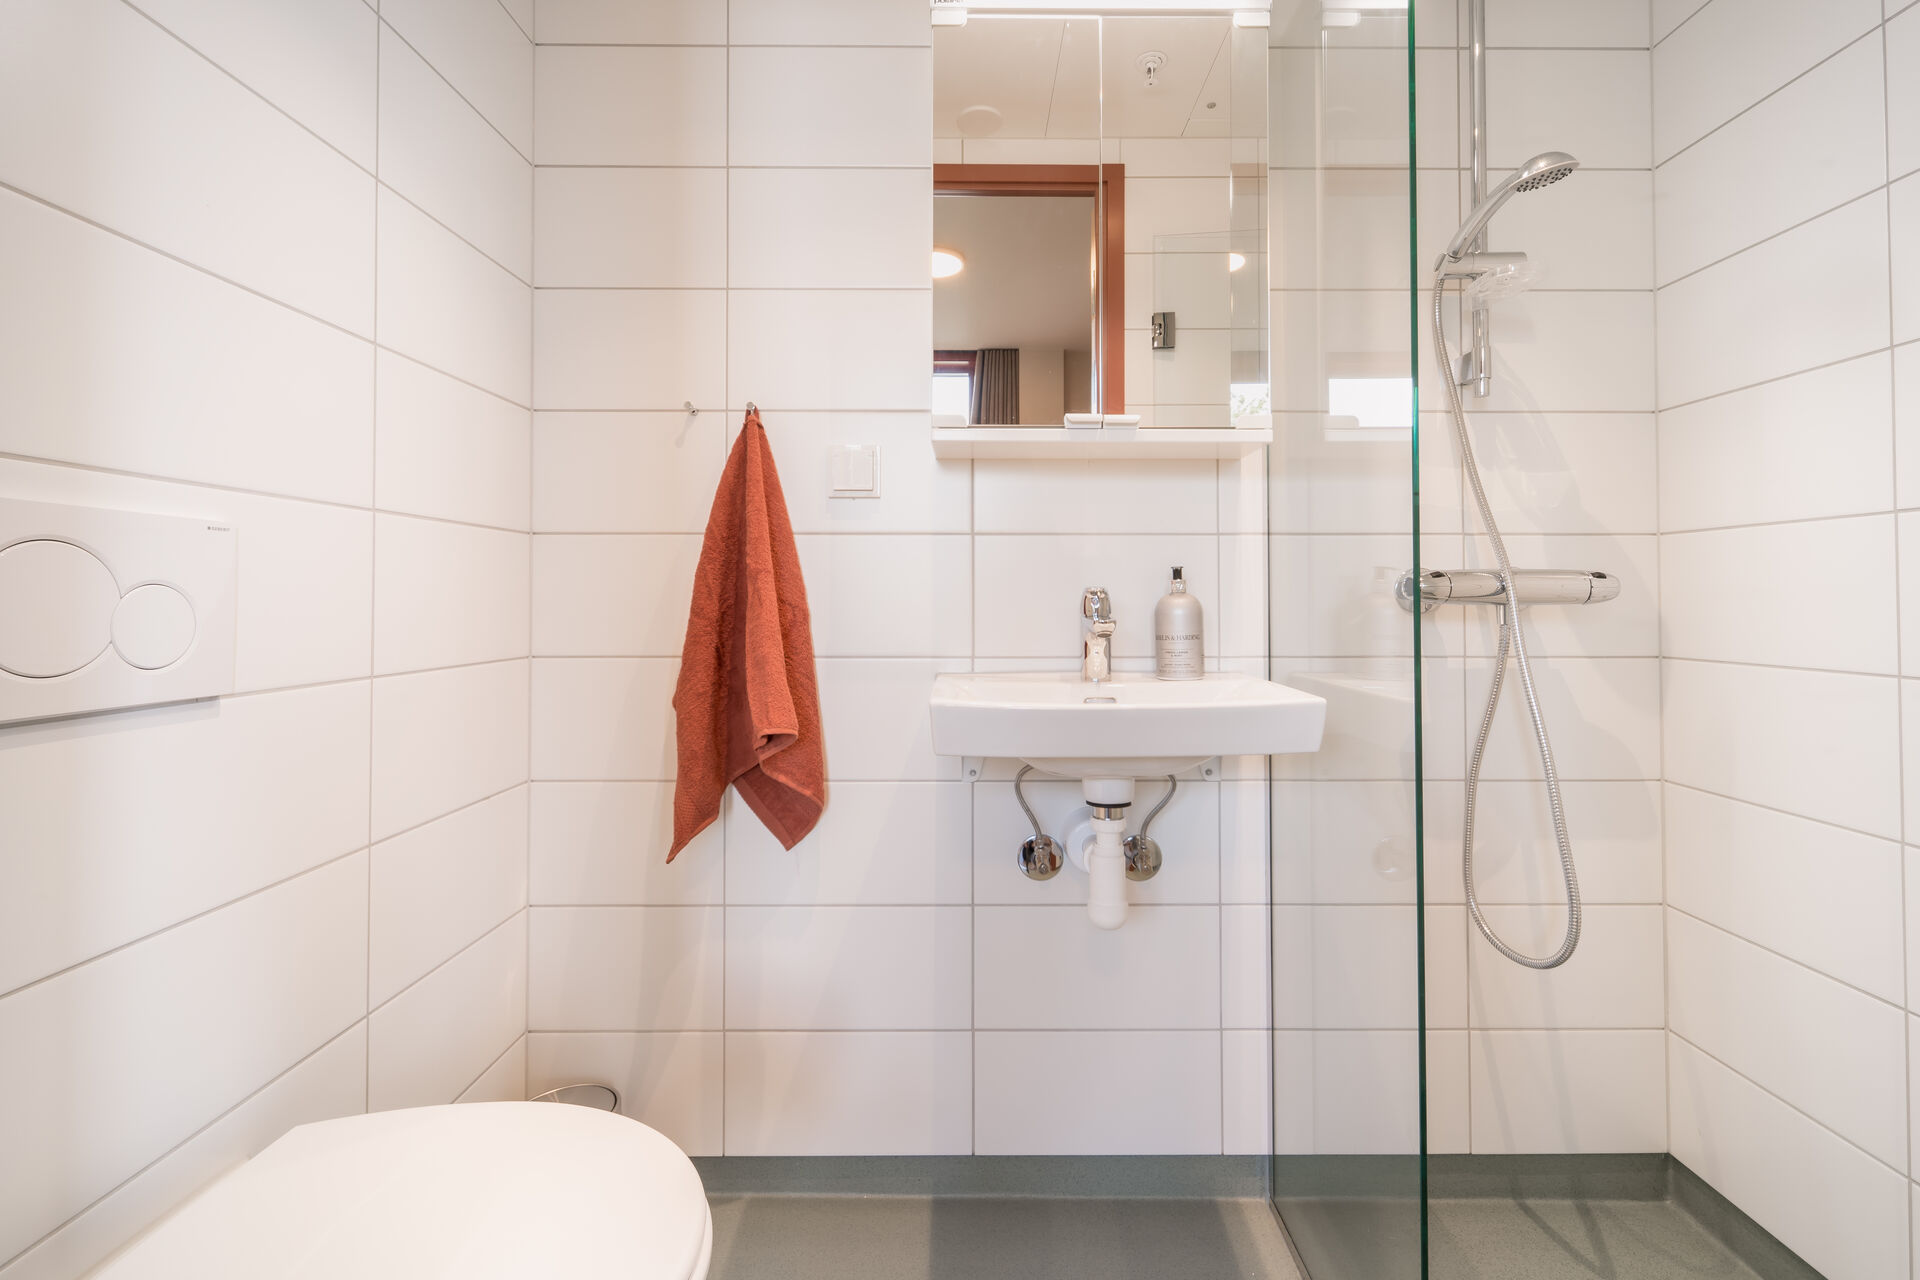 Image may contain: Mirror, Tap, Sink, Plumbing fixture, Bathroom sink.